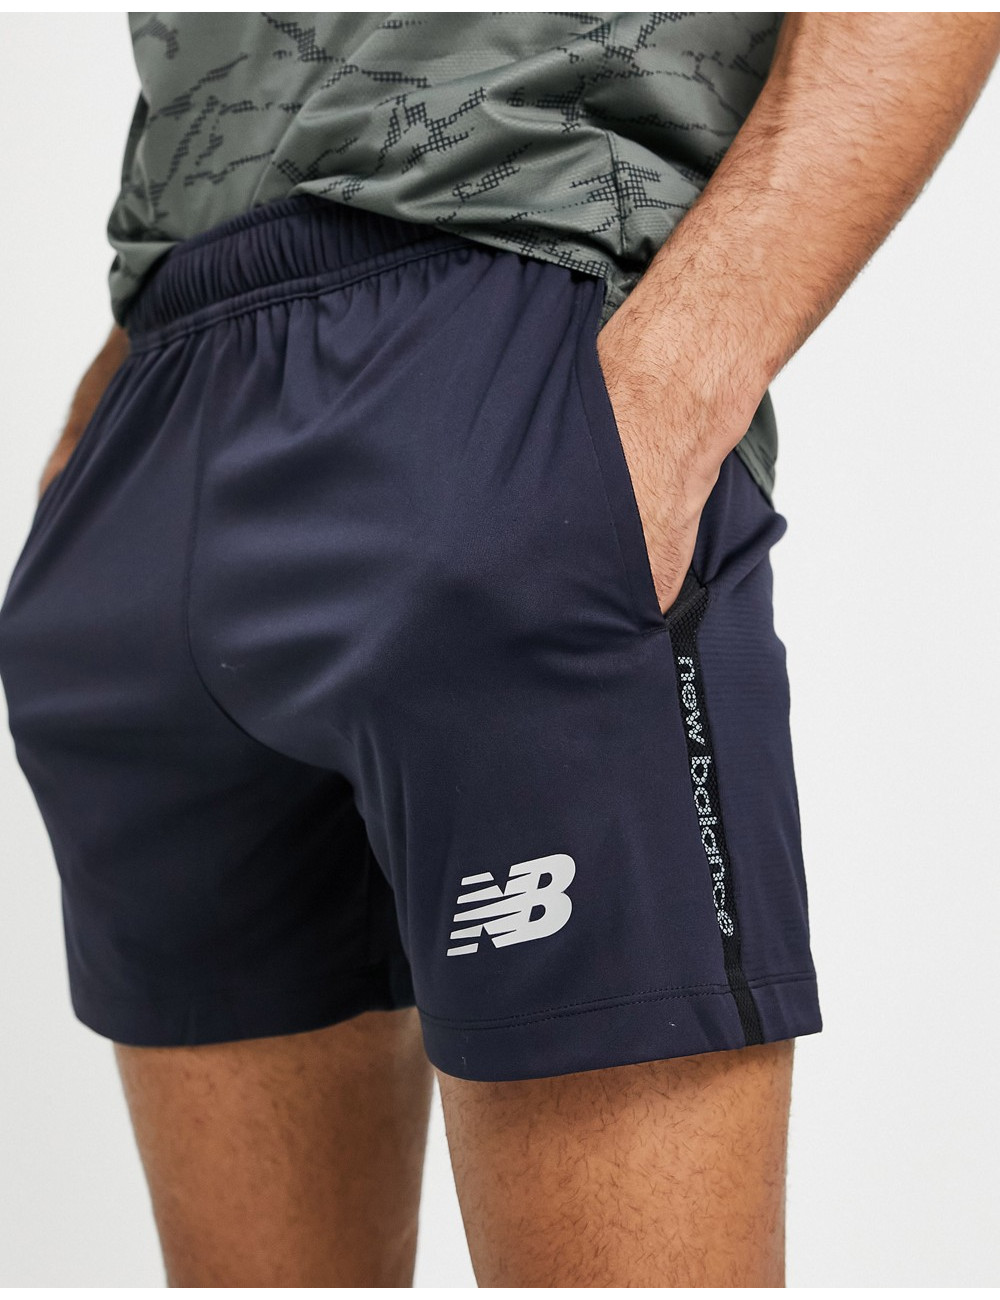 New Balance Football shorts...